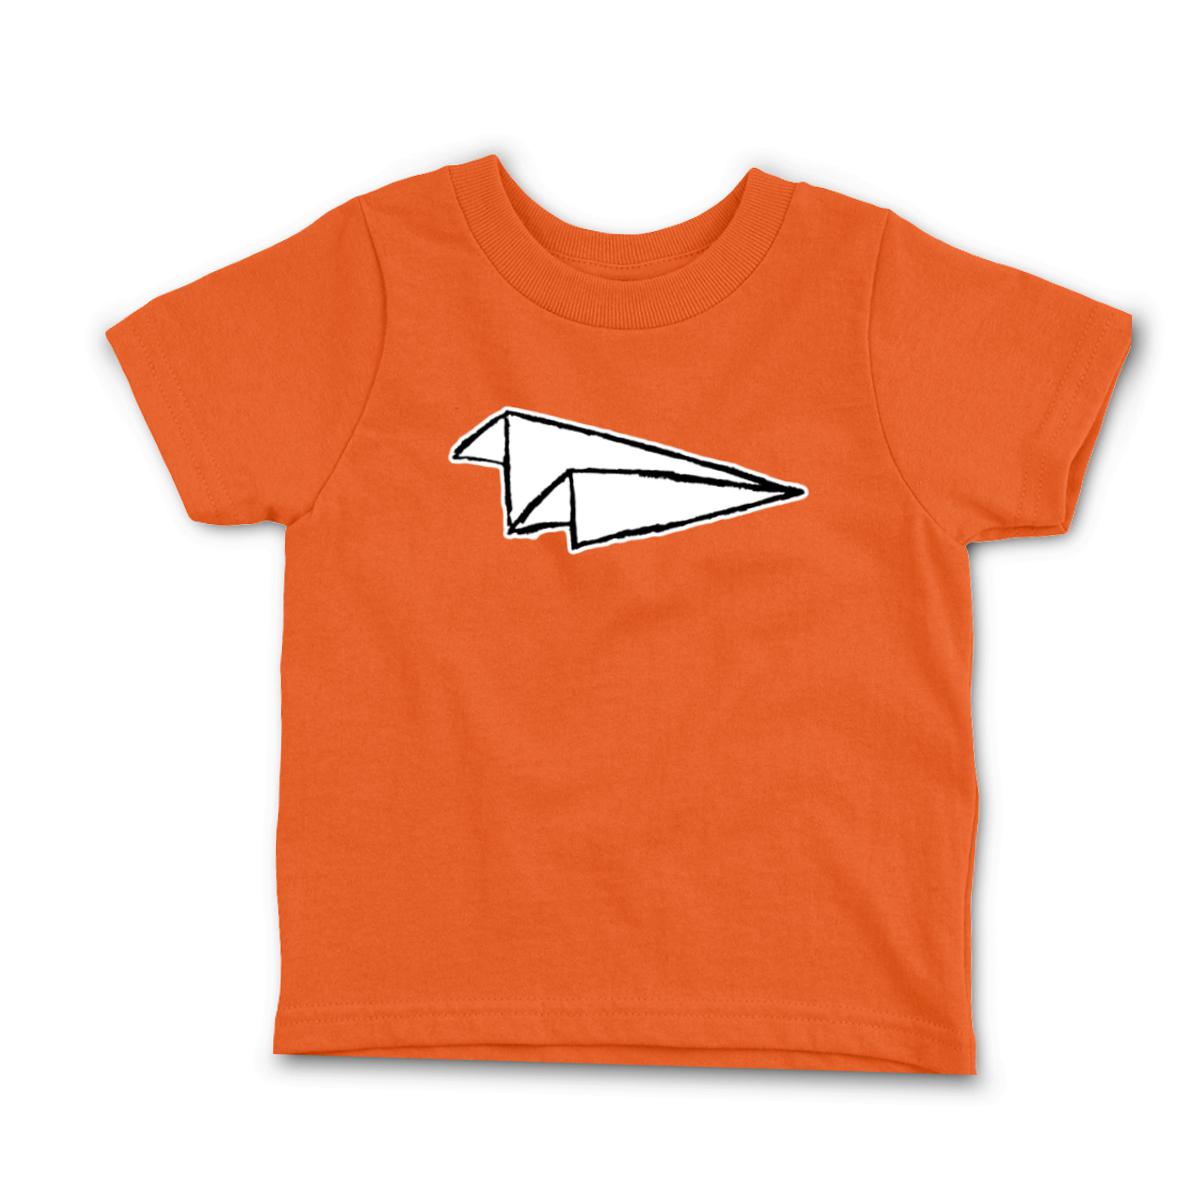 Airplane Sketch Infant Tee 12M orange